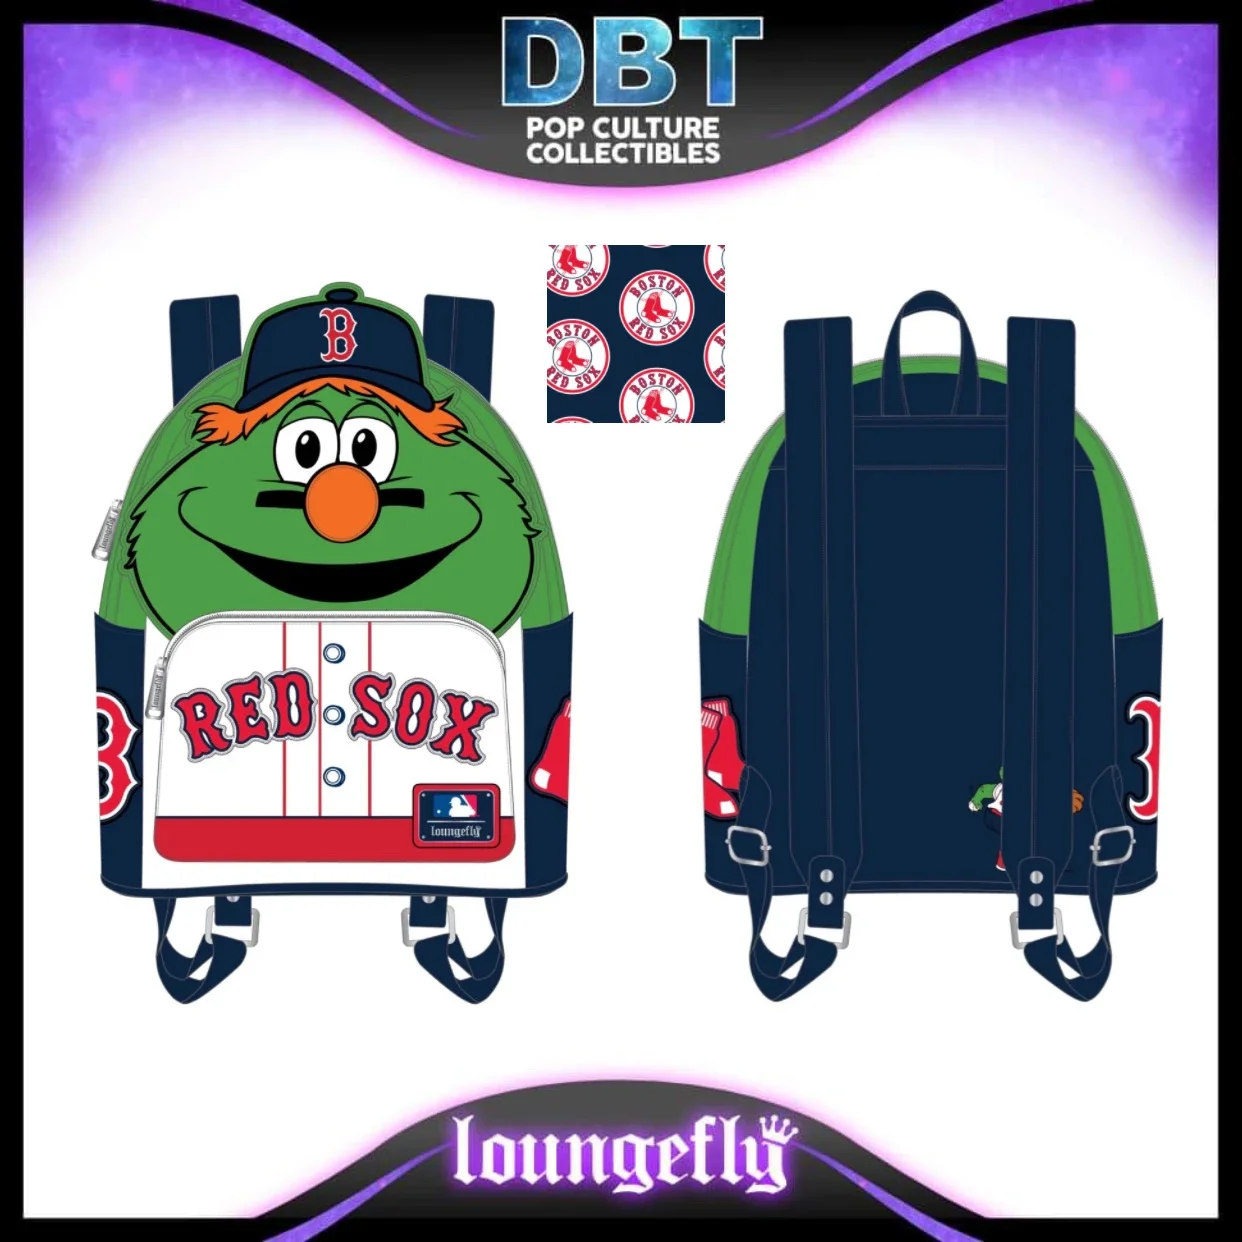 Los Angeles Dodgers Loungefly Baseball Seam Stitch Mini Backpack